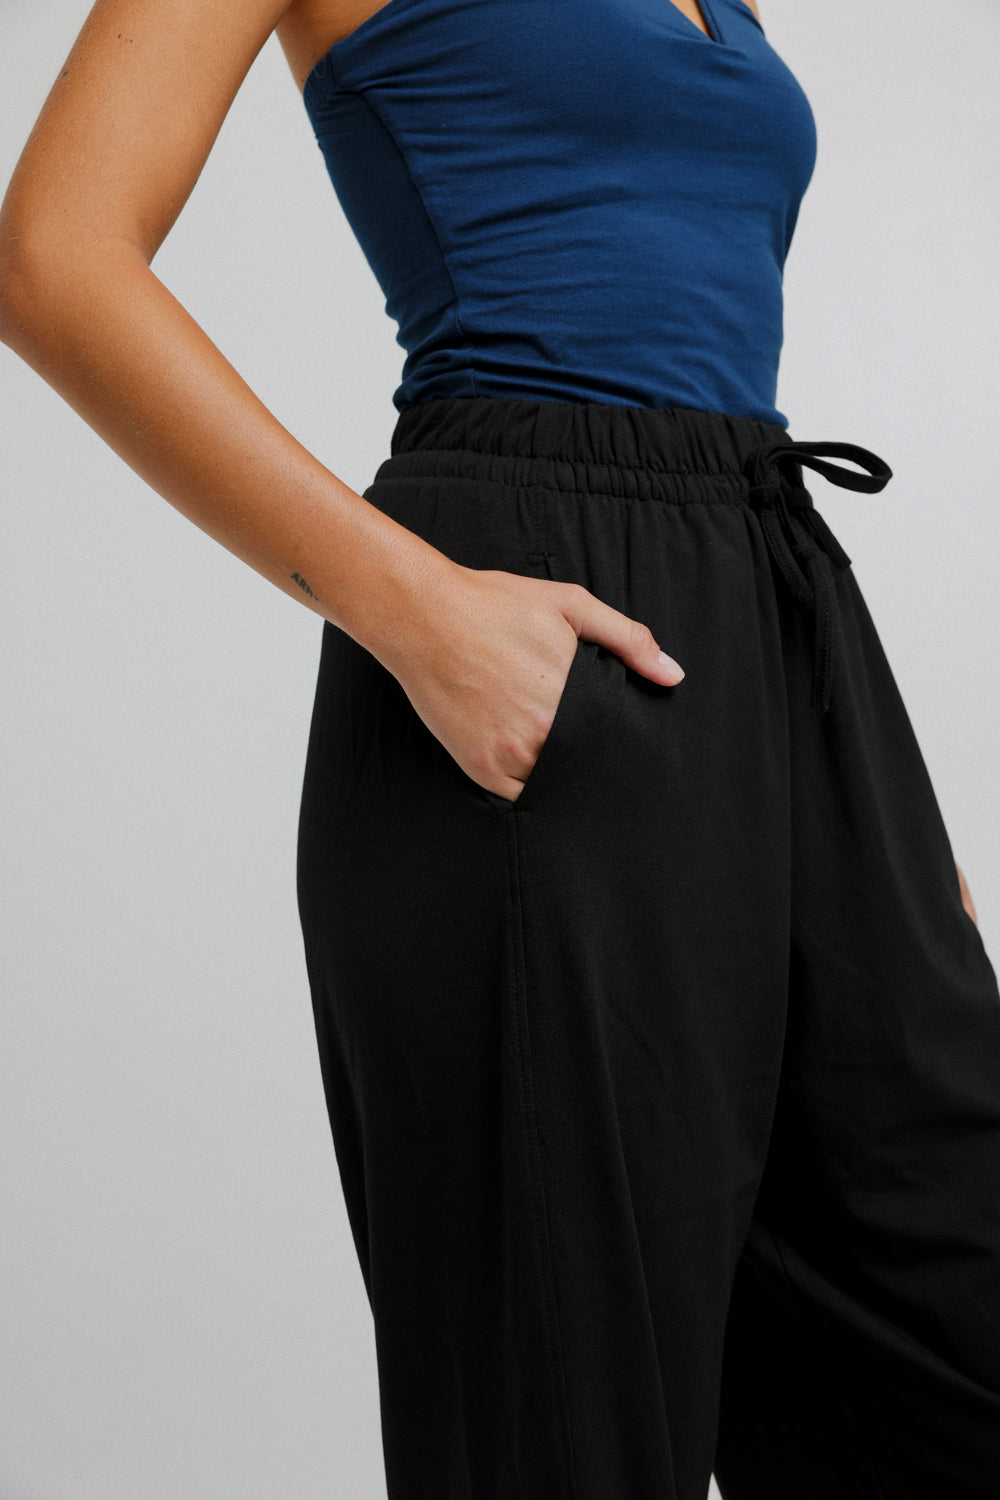 Change Black Bottoms מכנס אלגנט שחור לנשים עם כיסים 